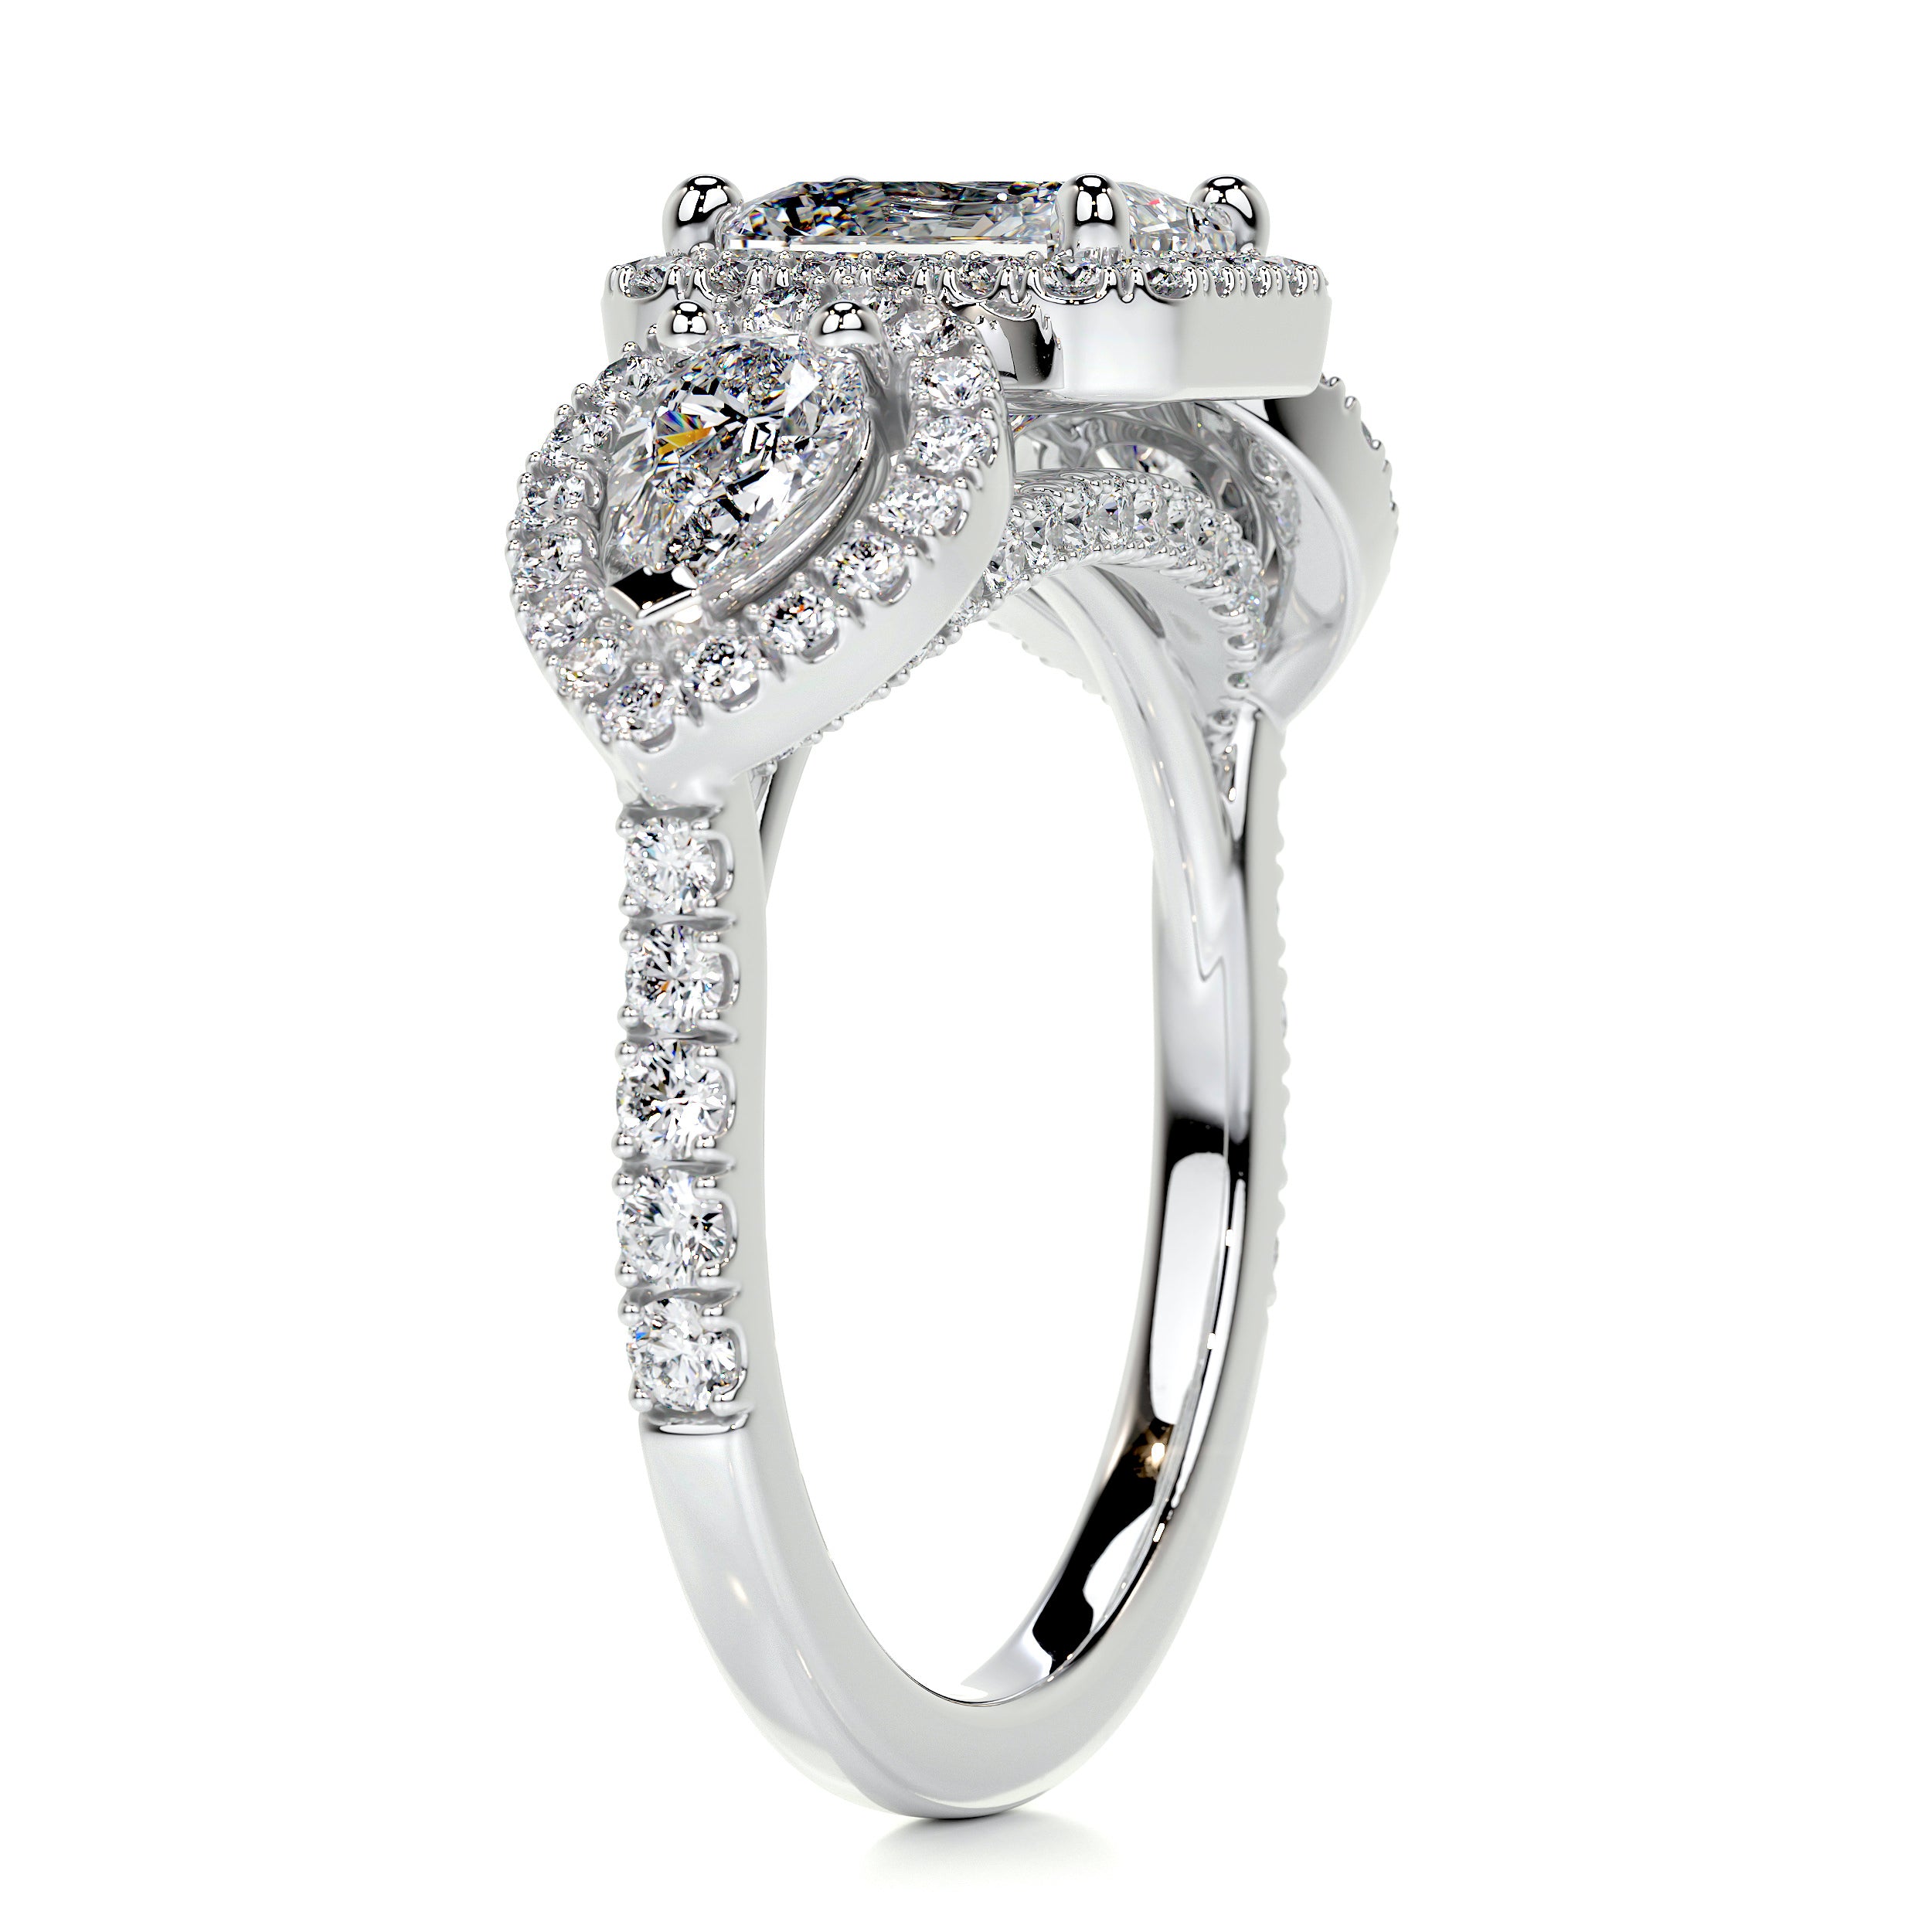 Violet Diamond Engagement Ring   (2.15 Carat) - 18K White Gold